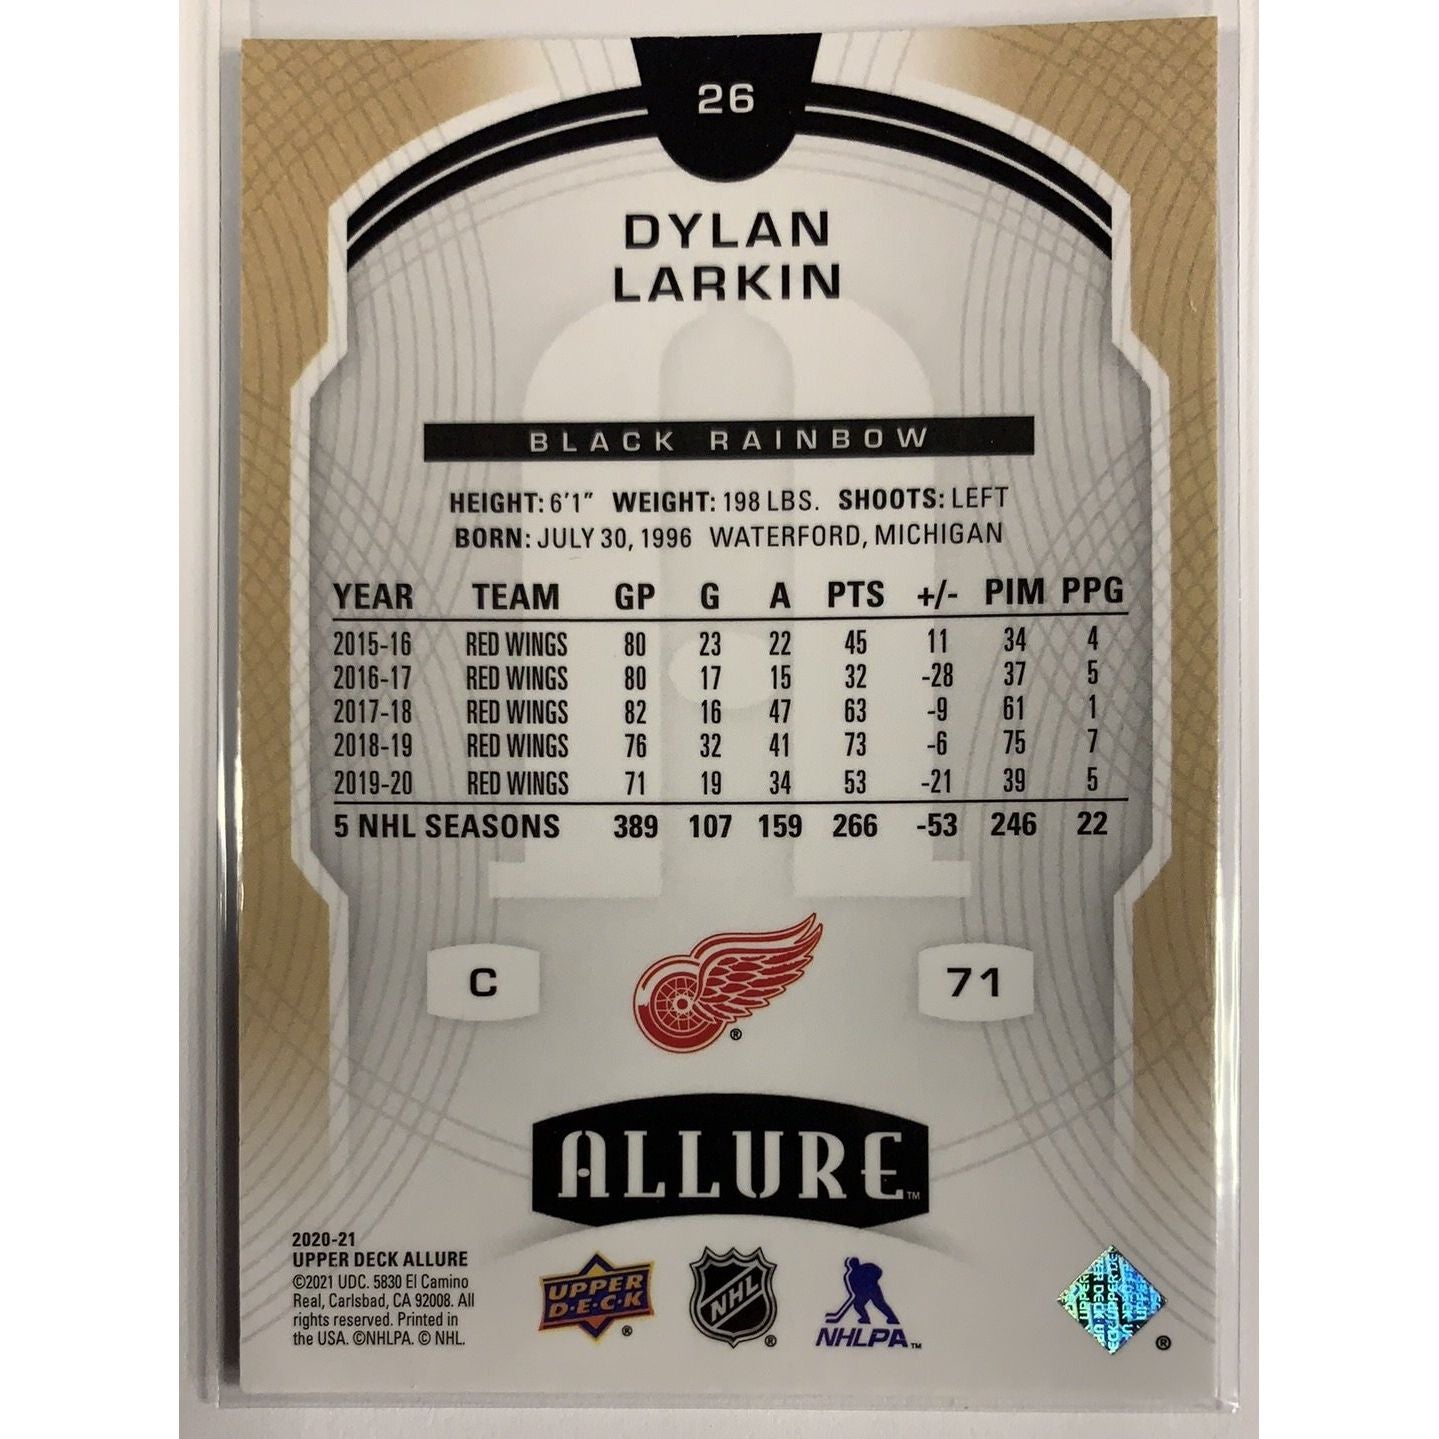  2020-21 Allure Dylan Larkin Black Rainbow  Local Legends Cards & Collectibles